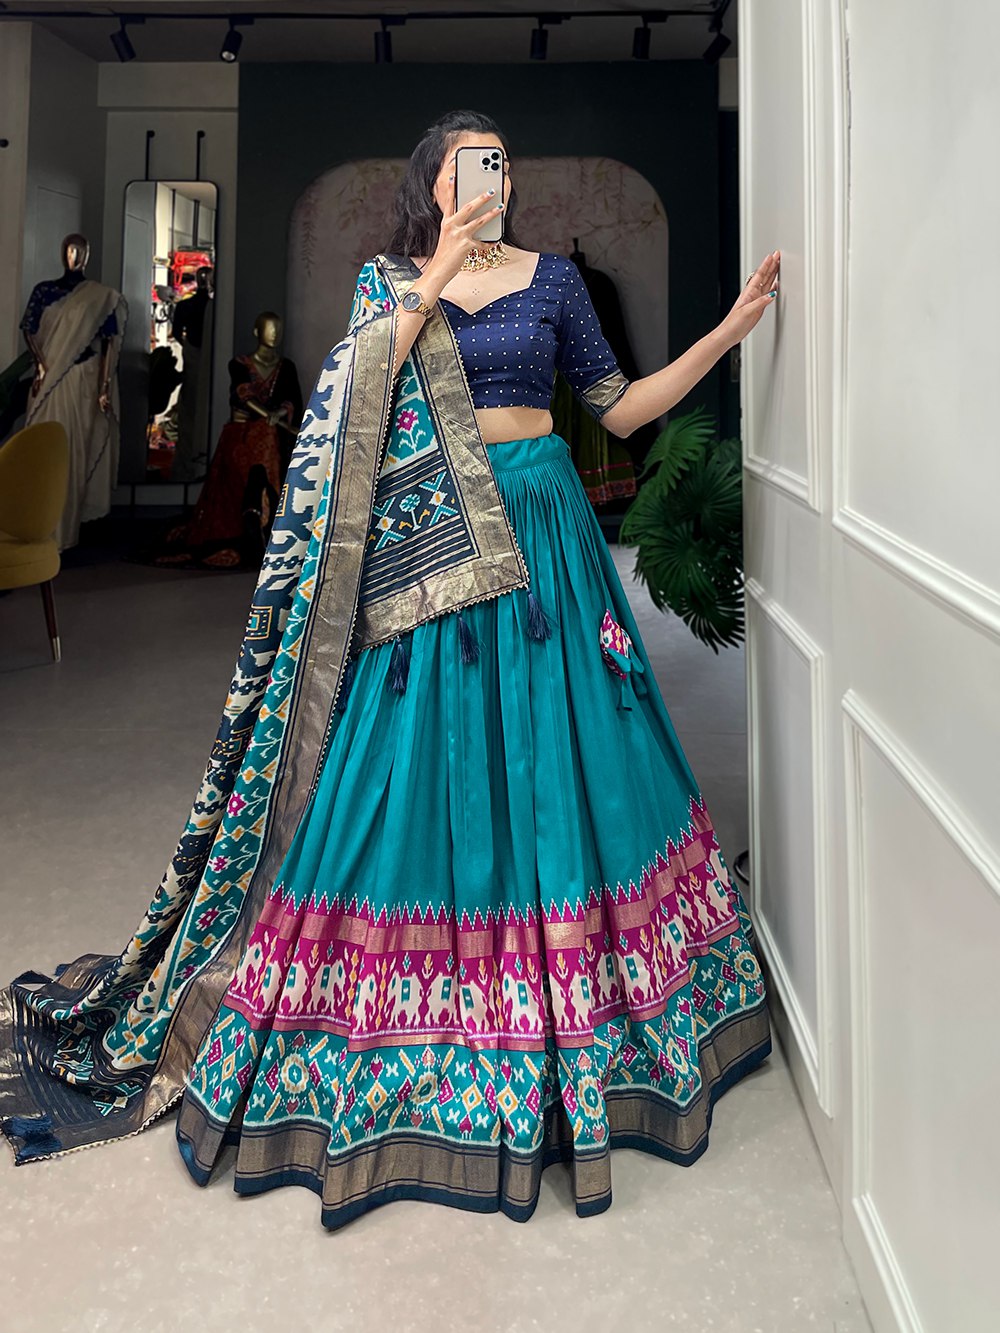 Top Navratri Dress Dealers in Indore - Best Garba Dress Dealers - Justdial